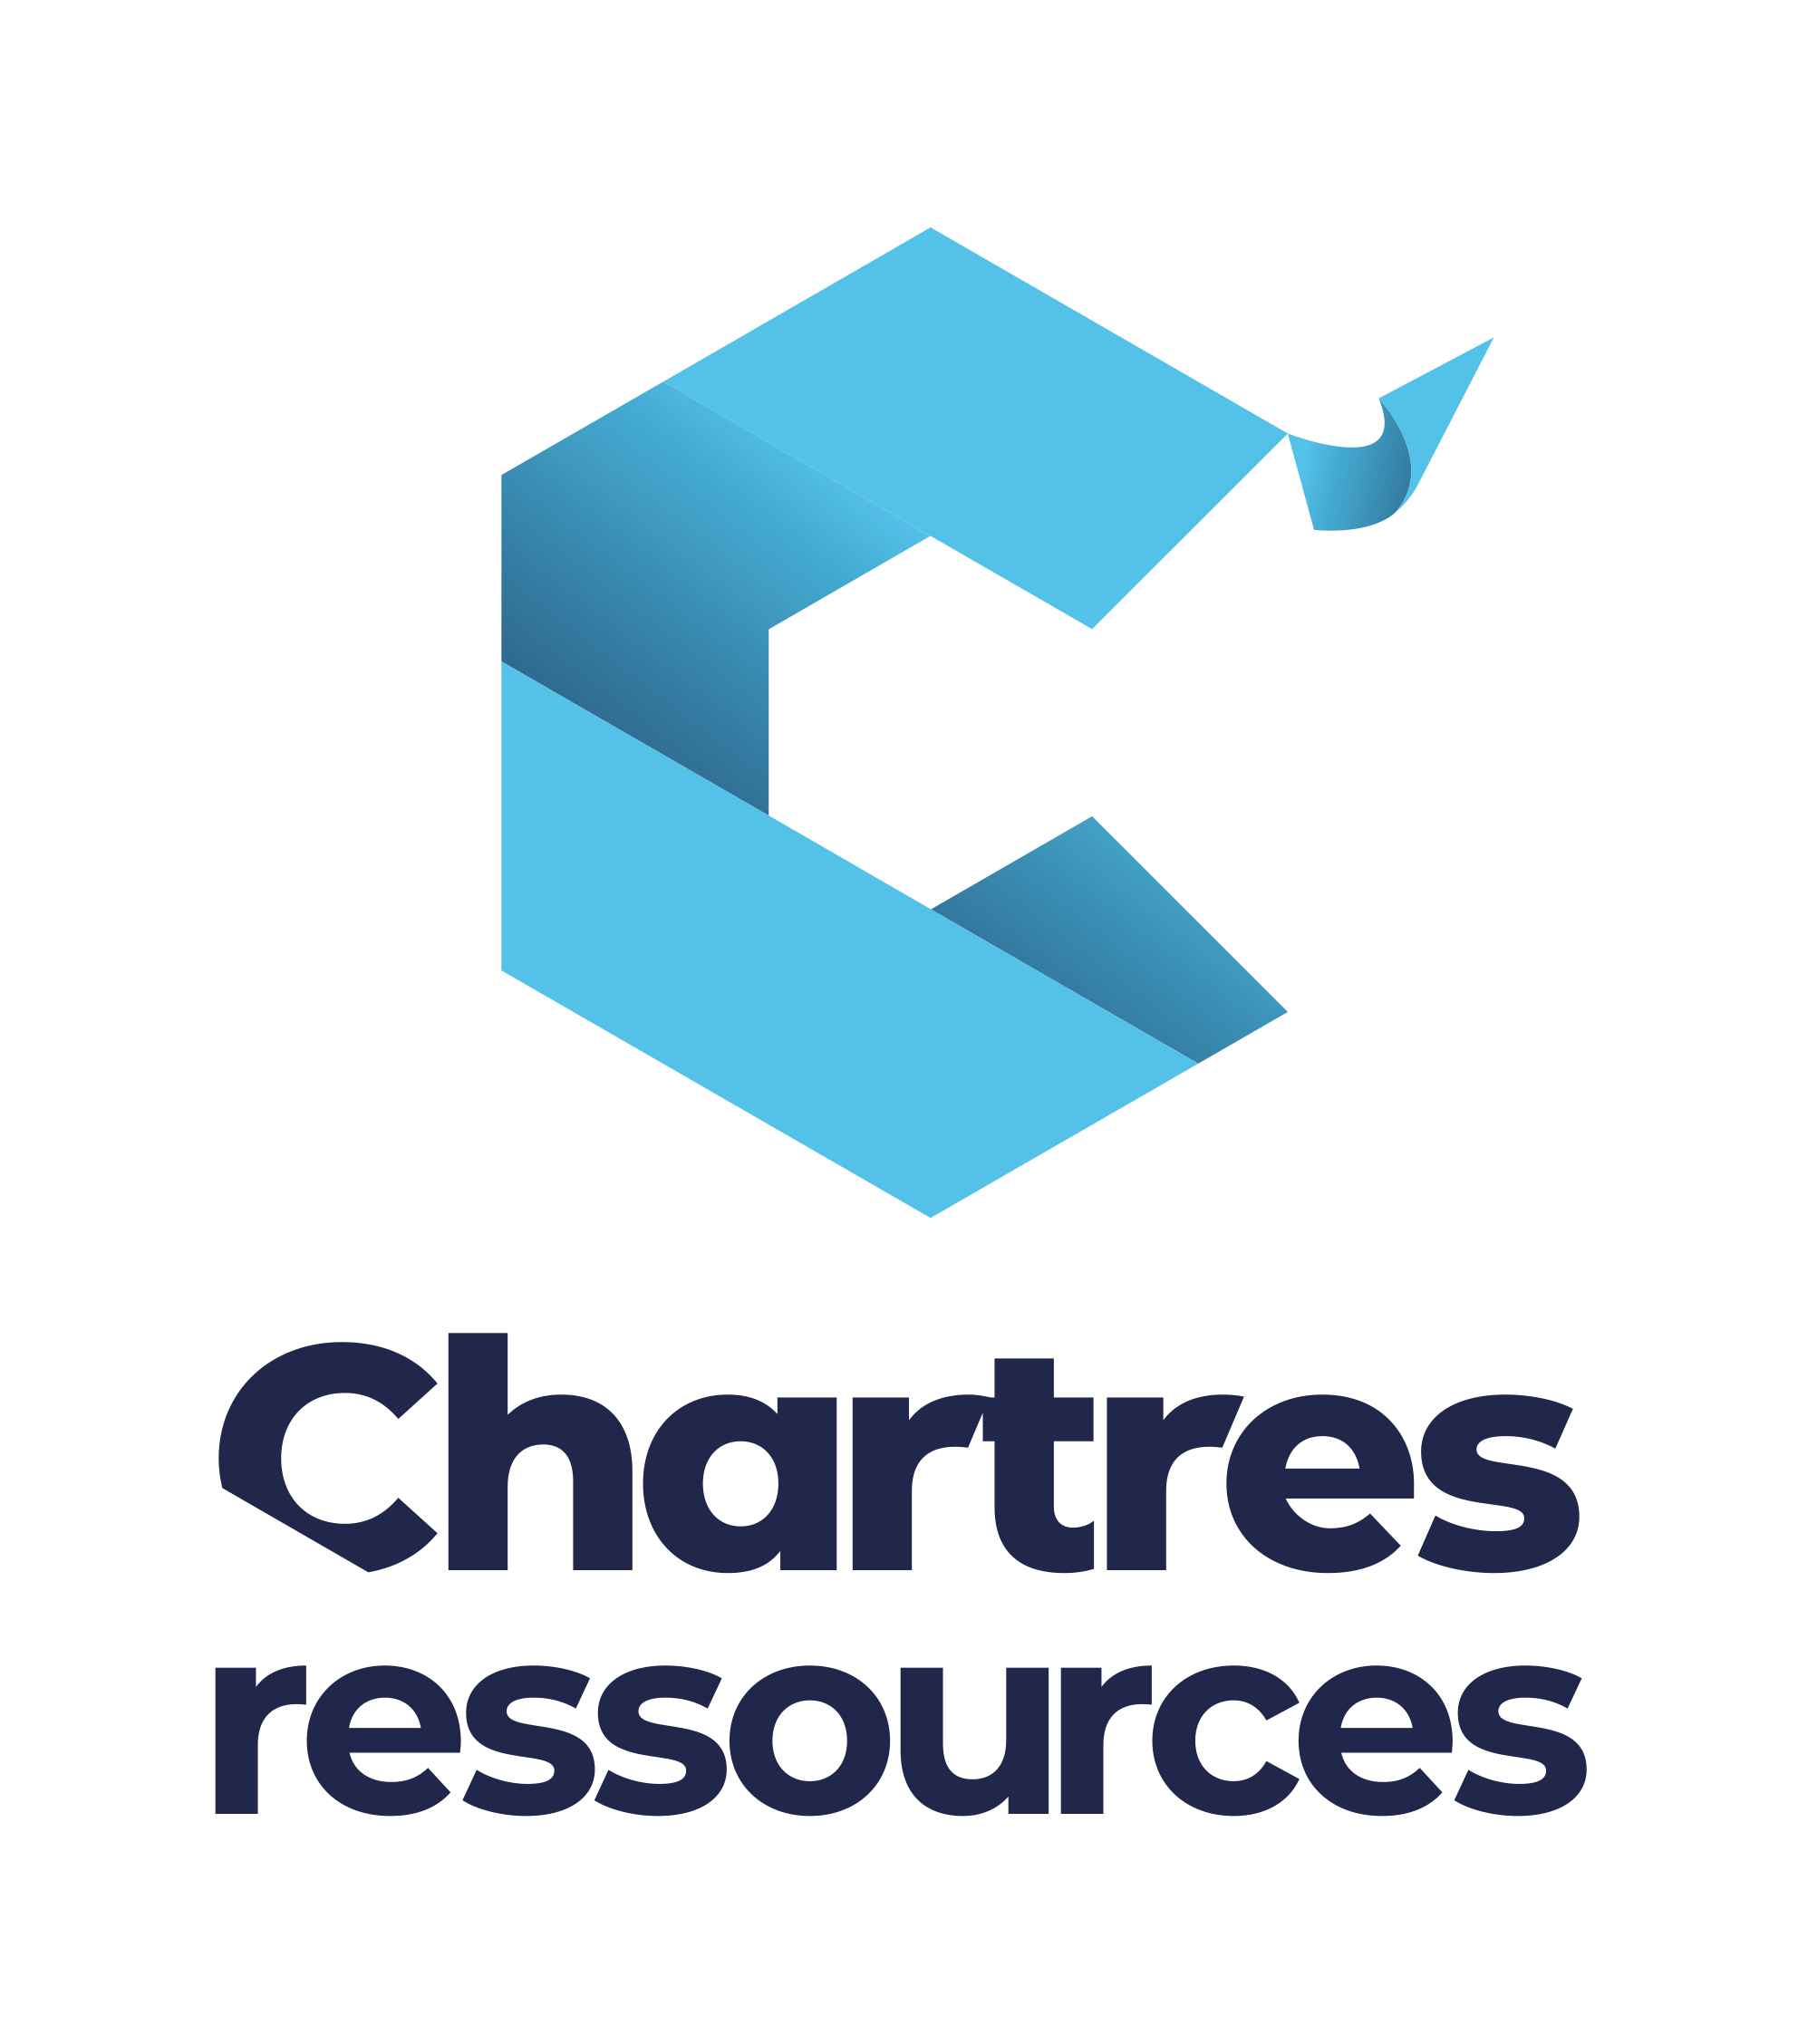 C'Chartres ressources